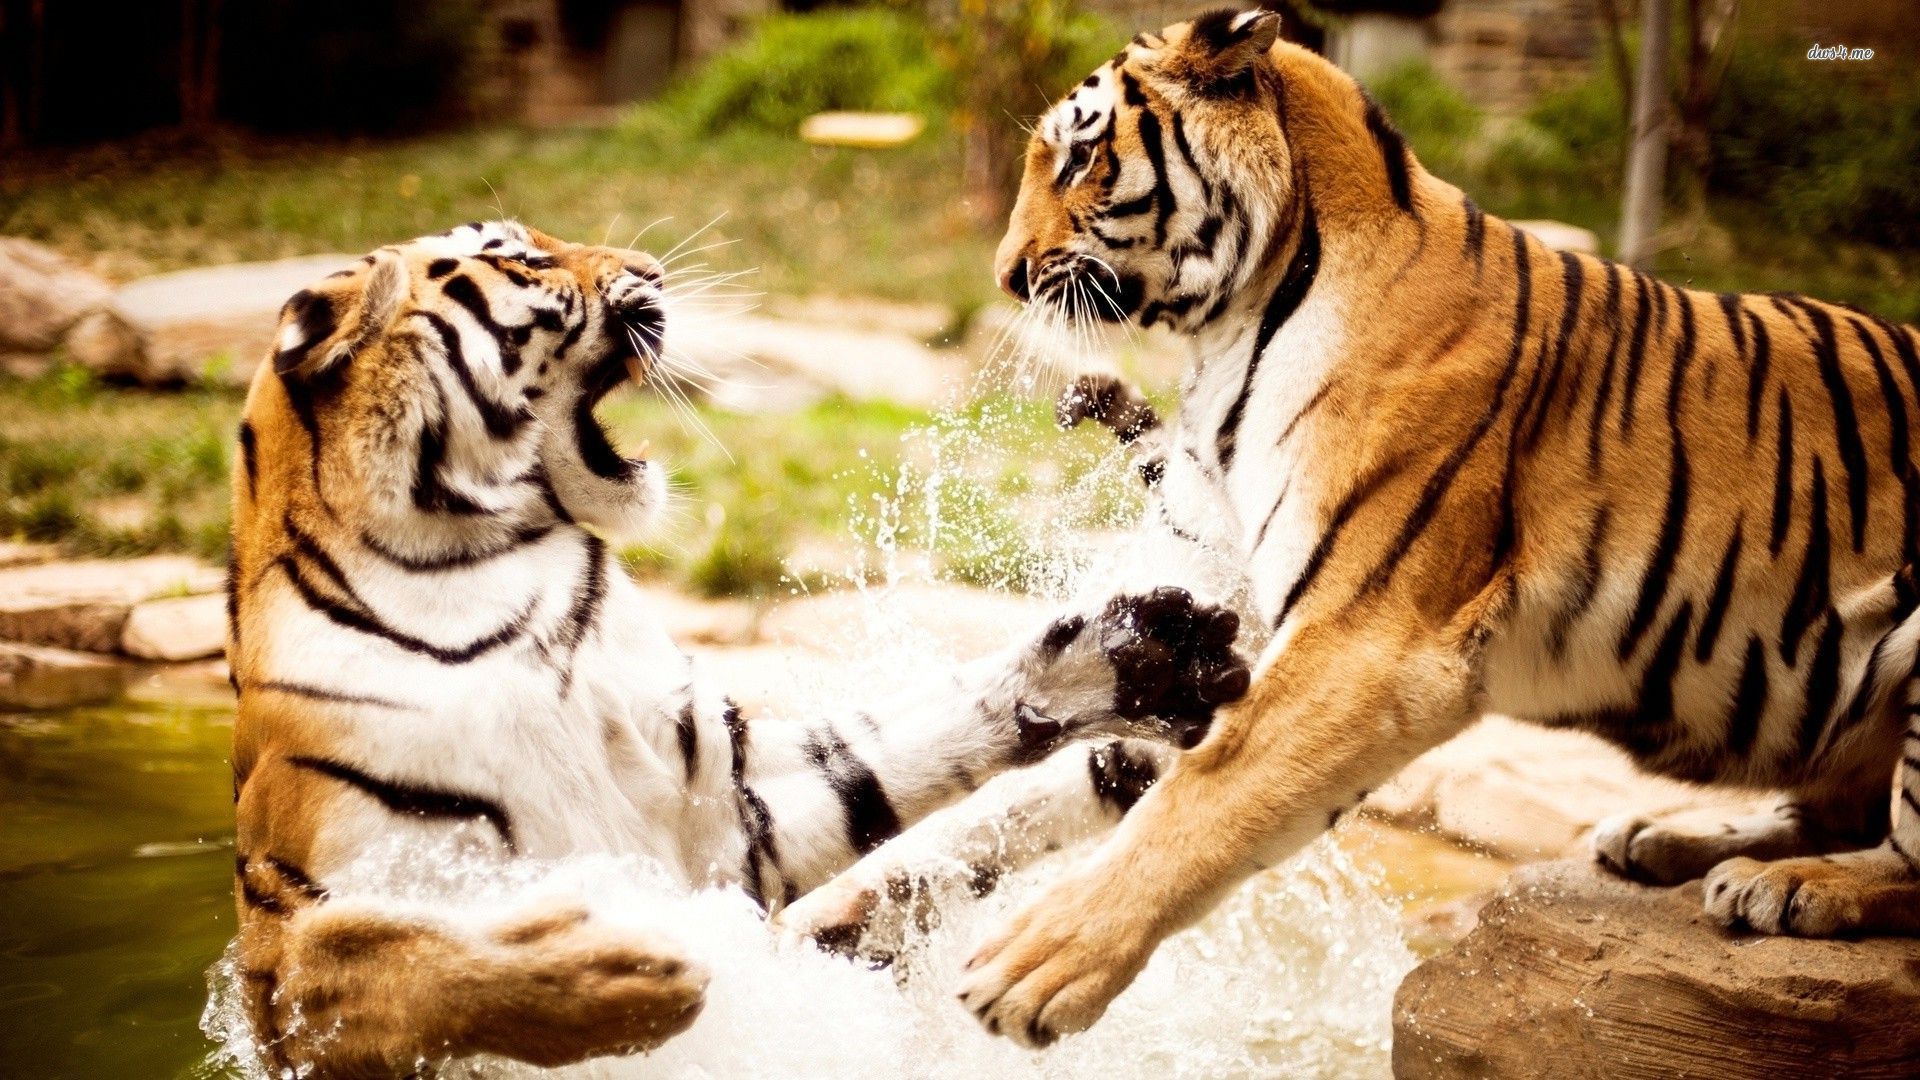 animal-tigers-fighting-wallpaper-2.jpg